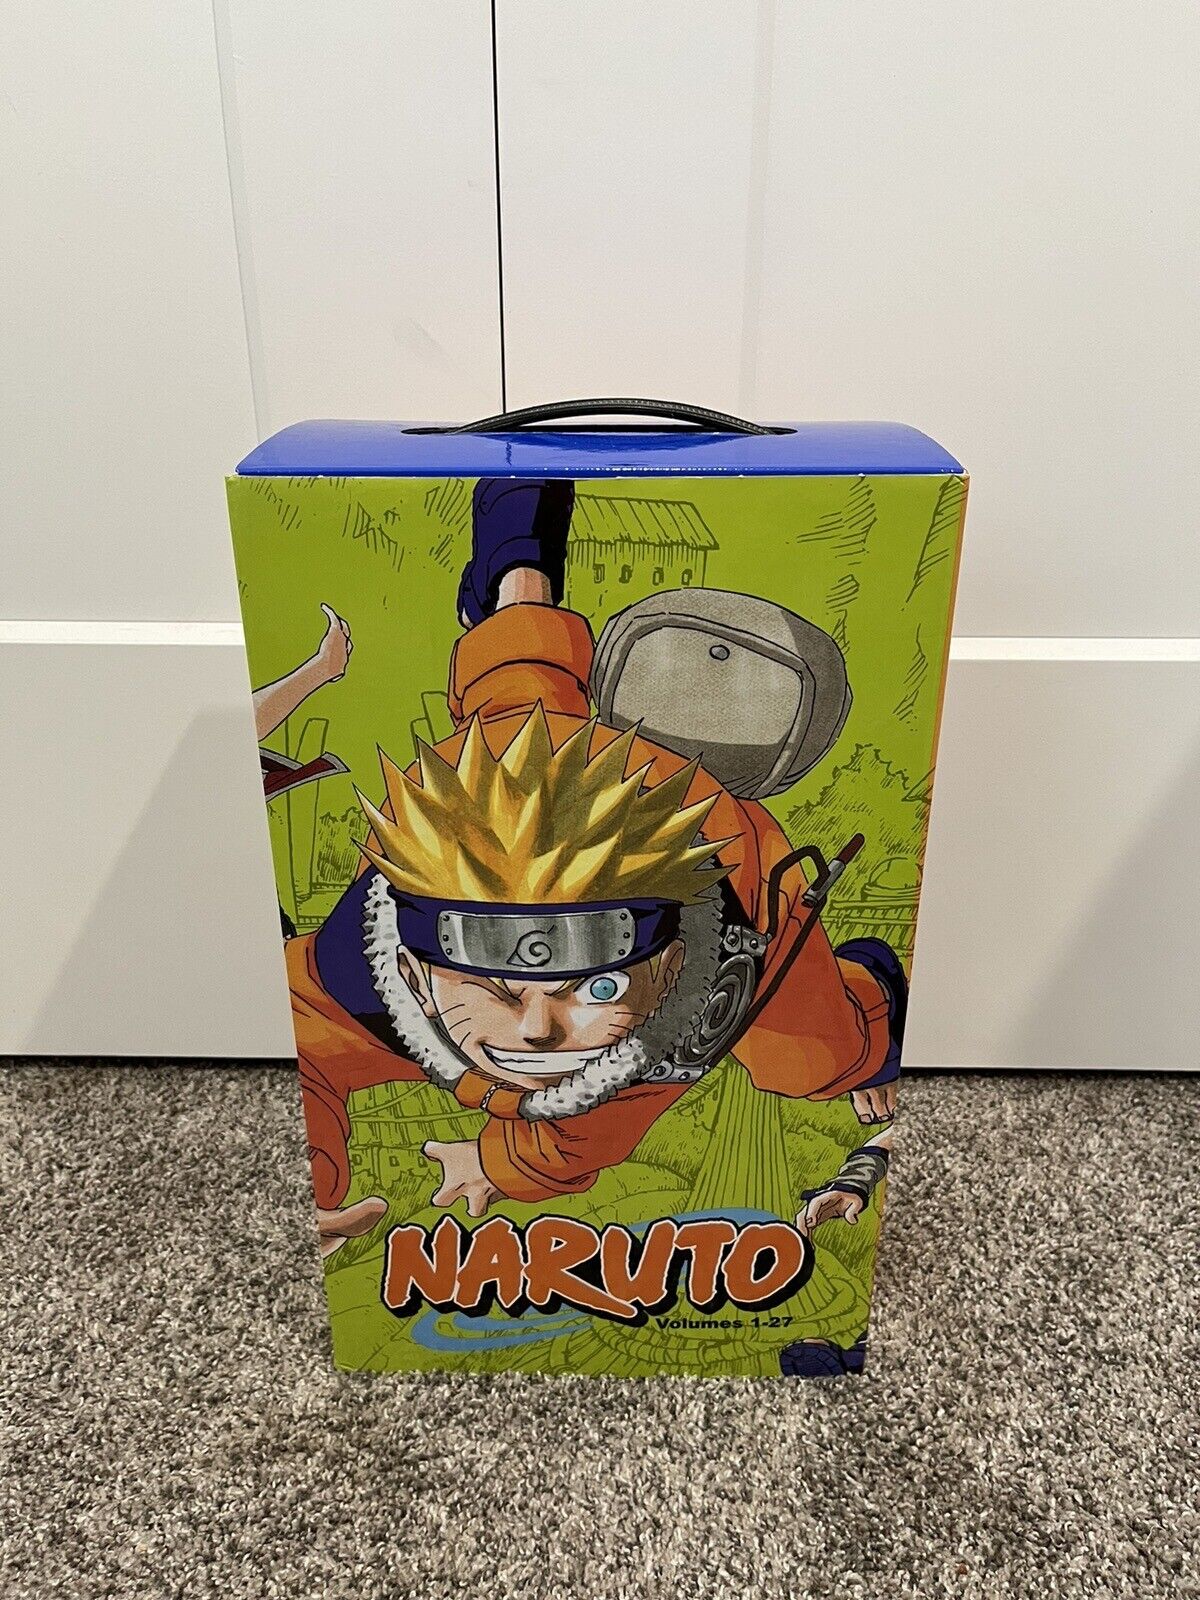 Naruto Volume 1-27 Manga Comic Book Collection Complete Box Set